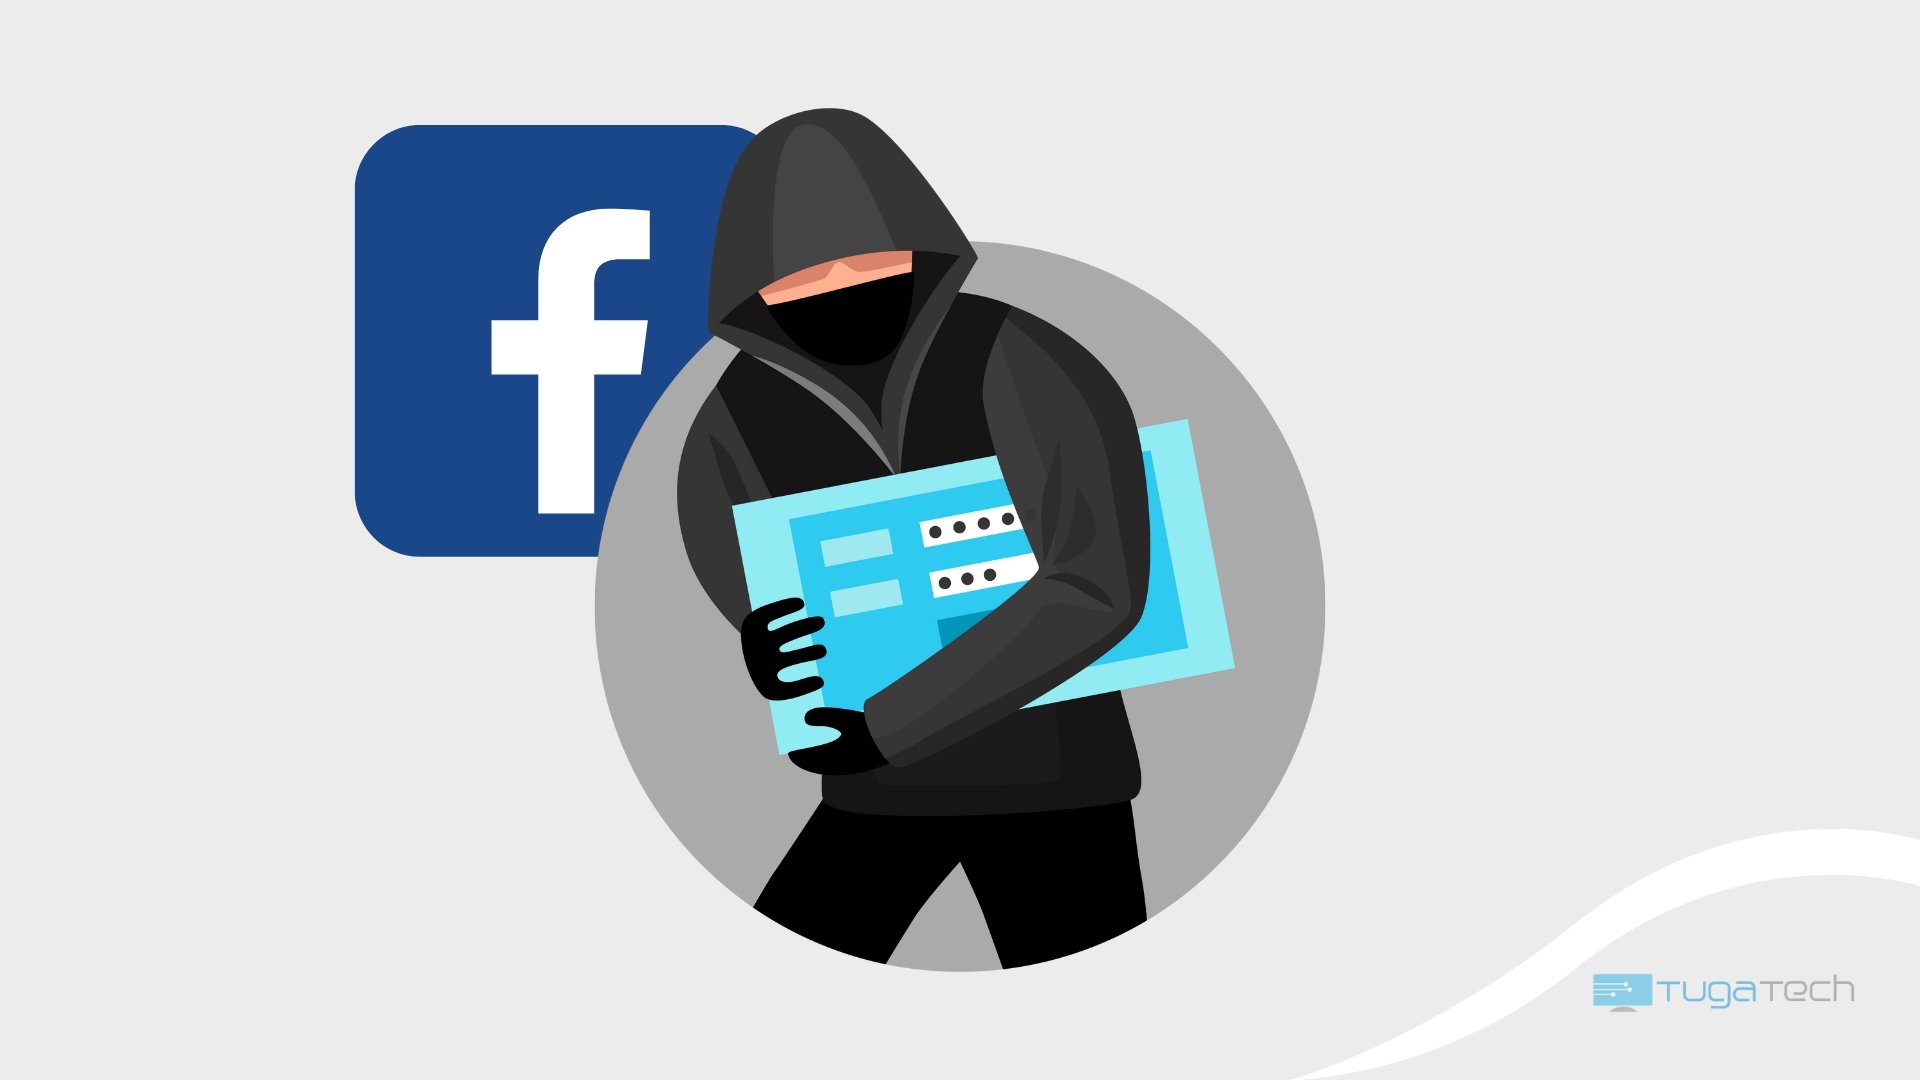 Facebook com hacker a roubar dados na frente